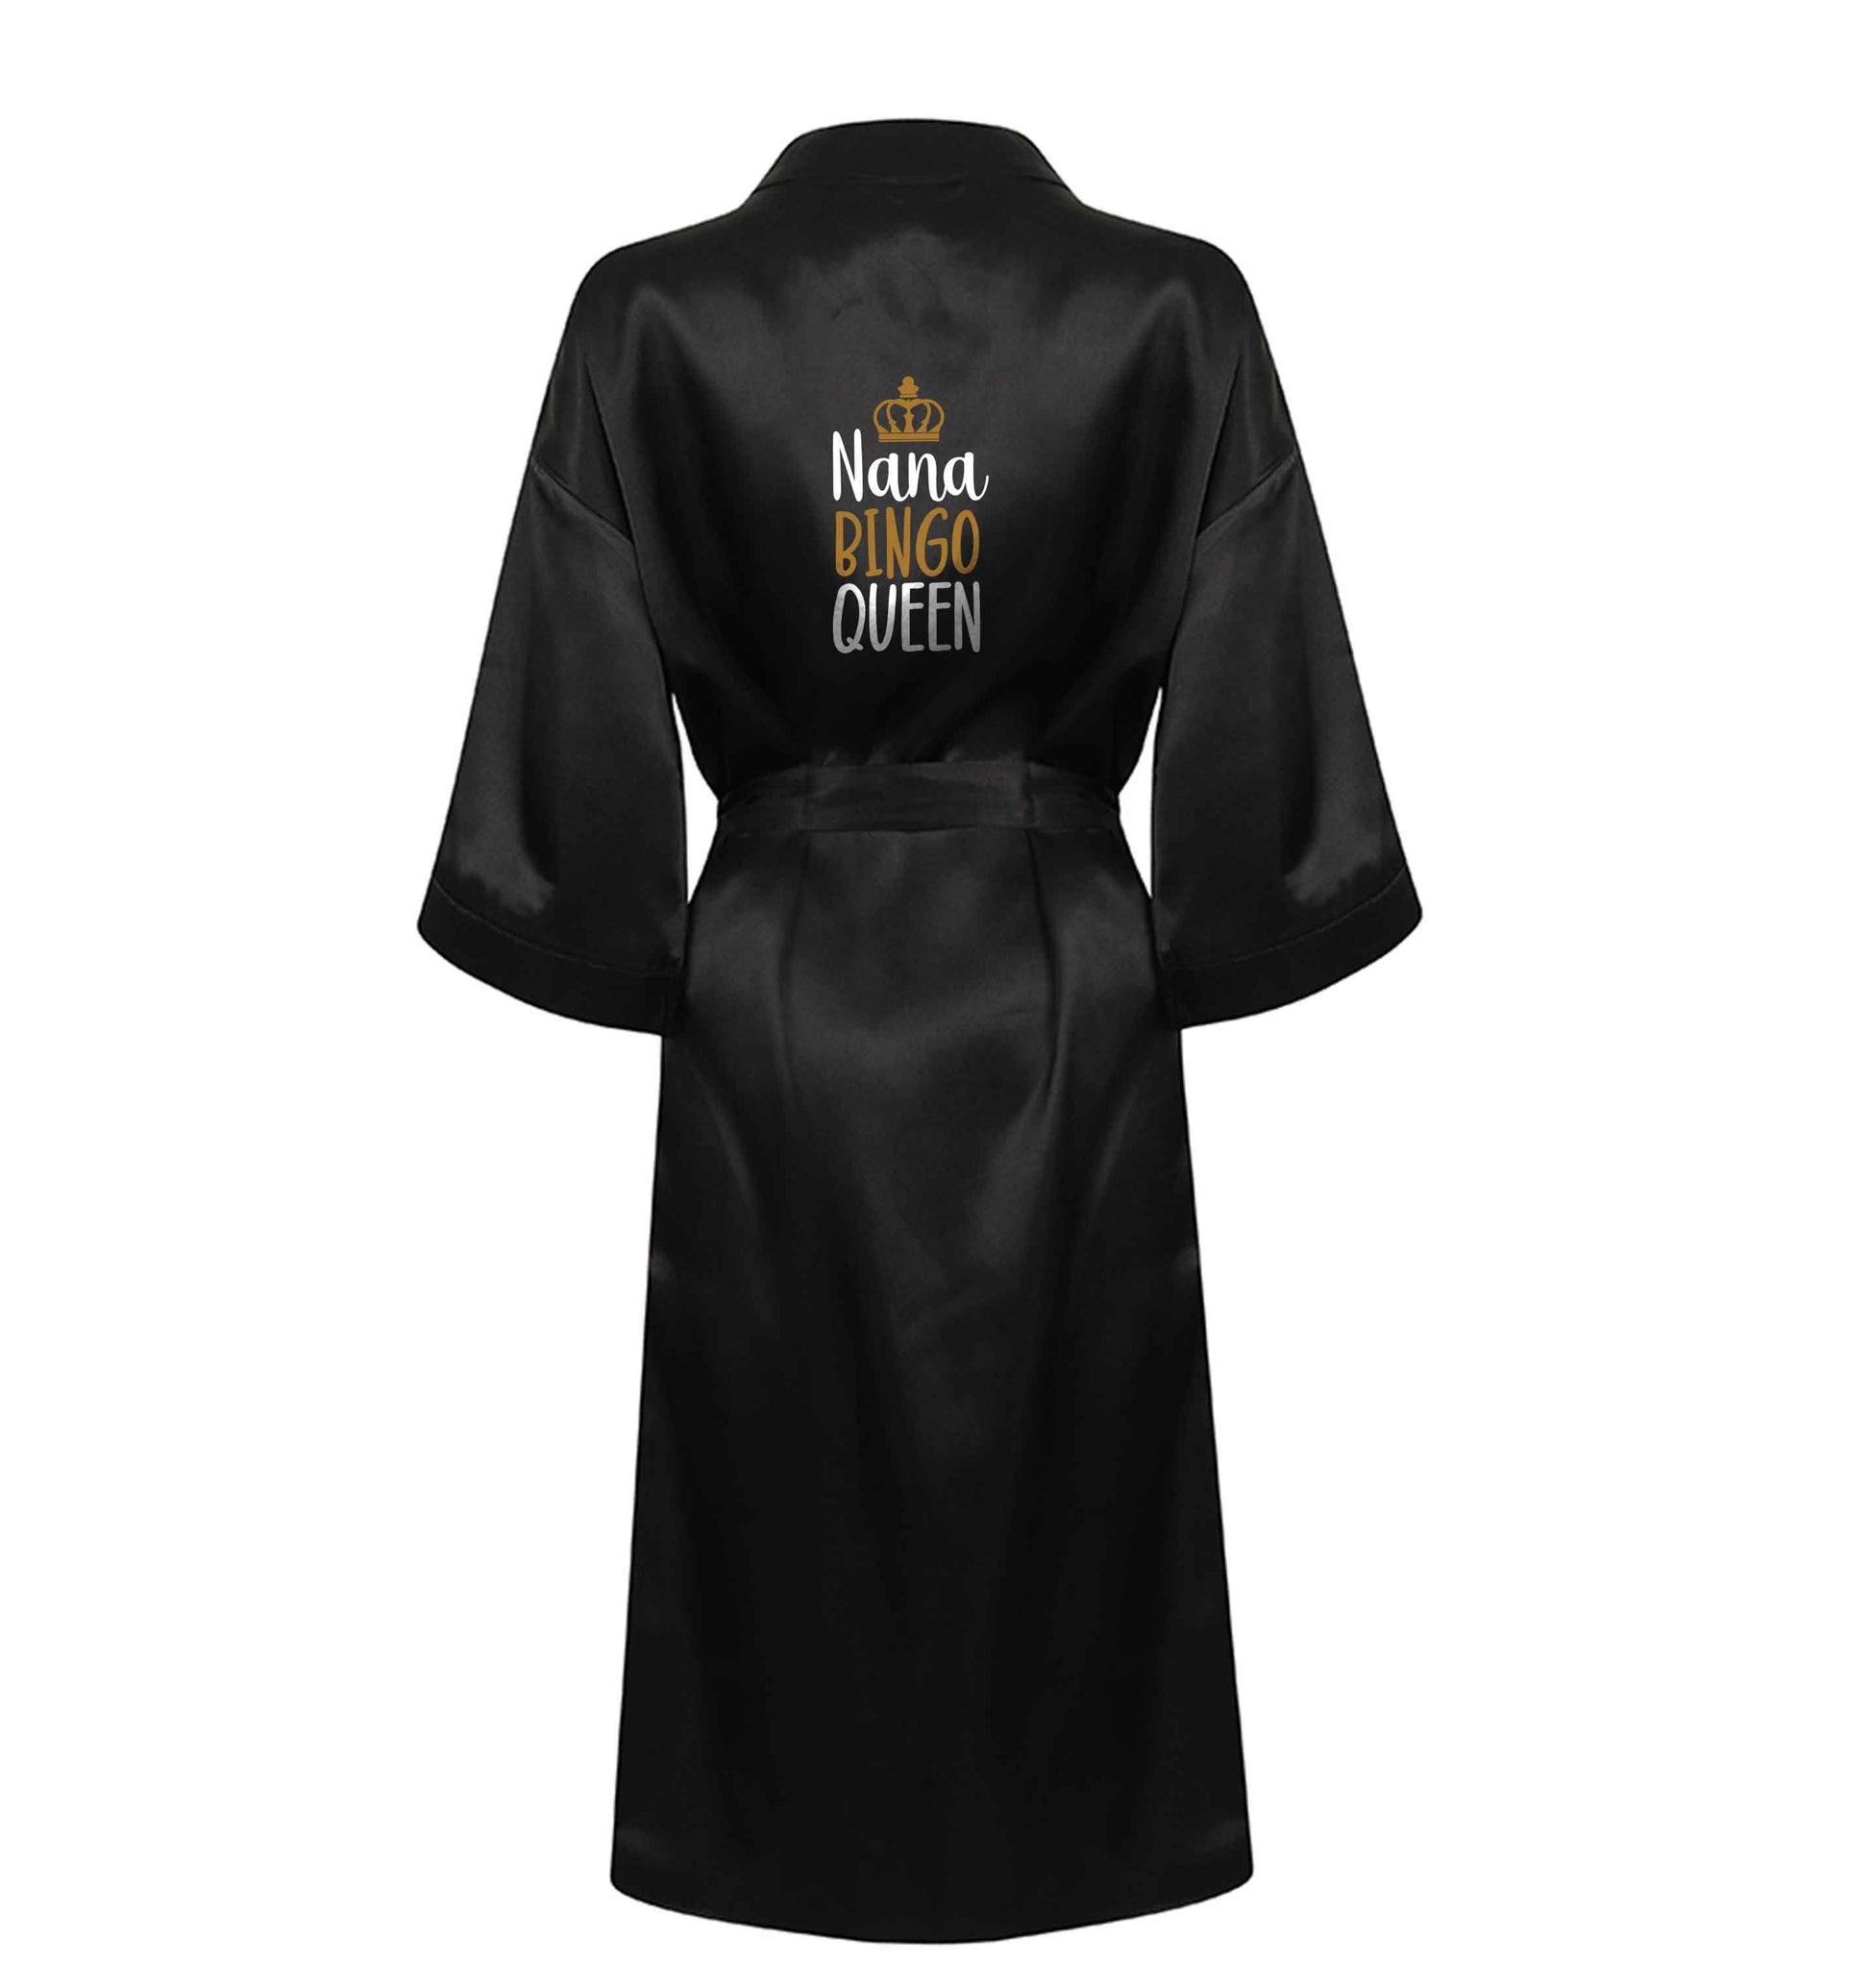 Personalised bingo queen XL/XXL black ladies dressing gown size 16/18